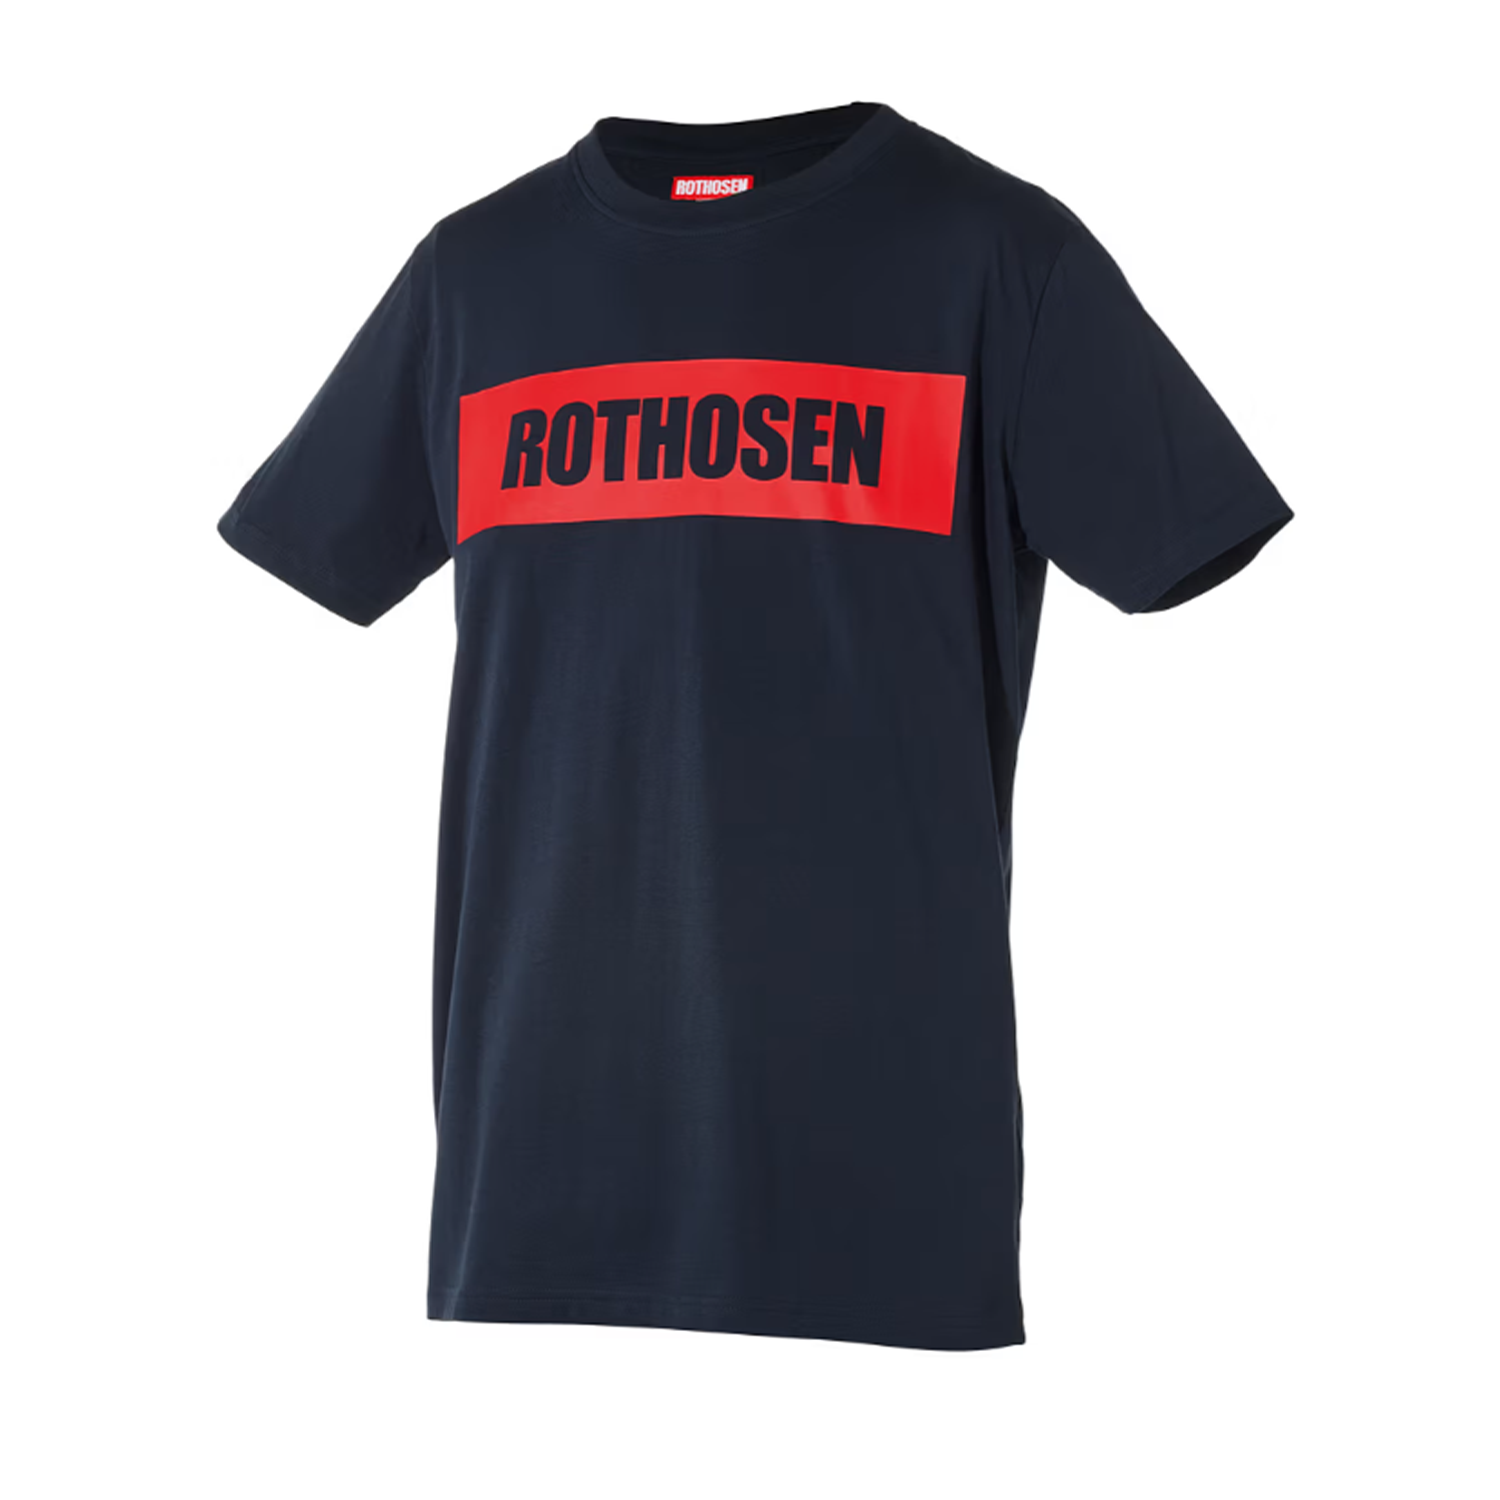 HSV T-Shirt "Brückenführer" Rothosen - schwarz